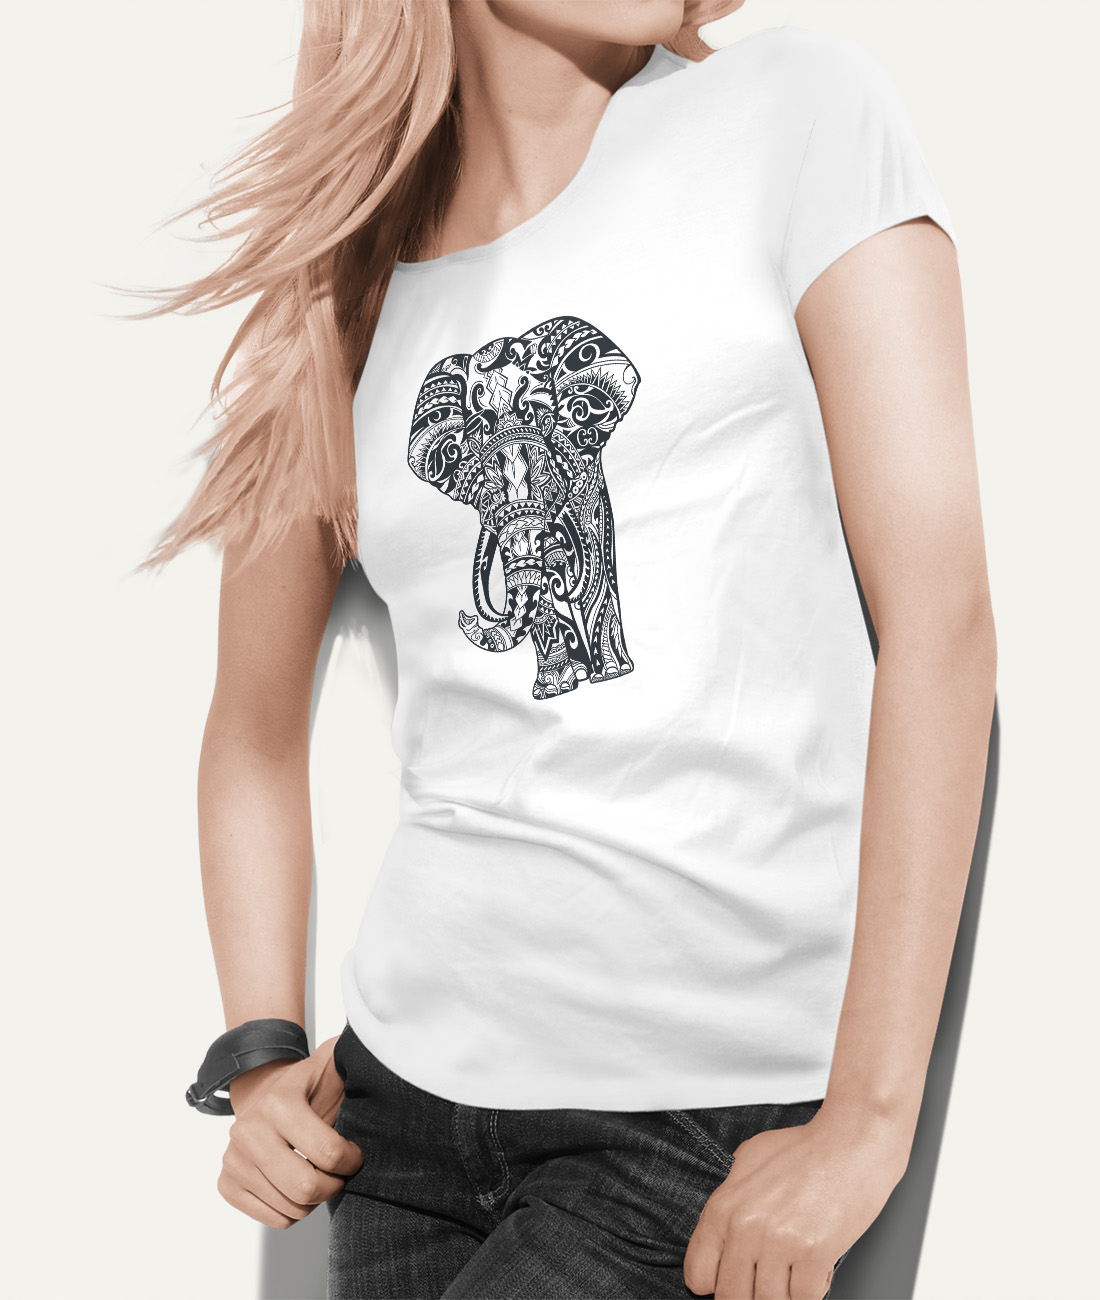 Womens tshirt with an elephant T-shirt